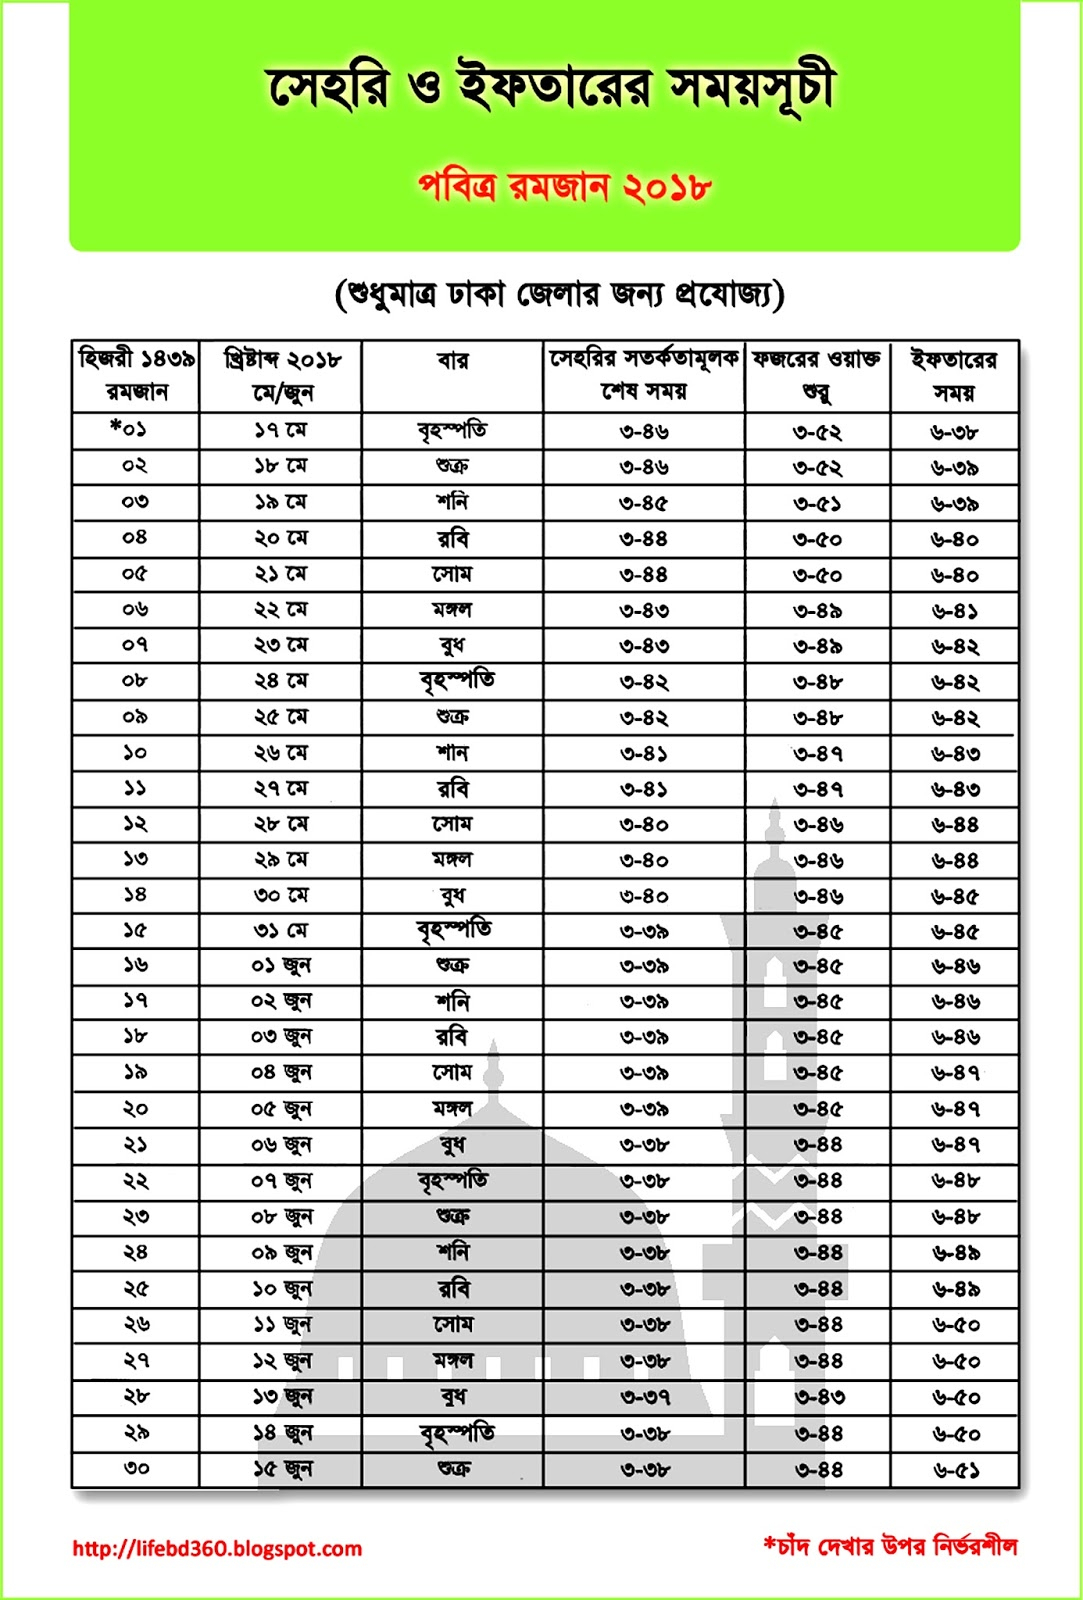 Ramadan Calendar 2018 For Dhaka Bangladesh | Life In Bangladesh with Ramdan Calendar Timetable Templates Free